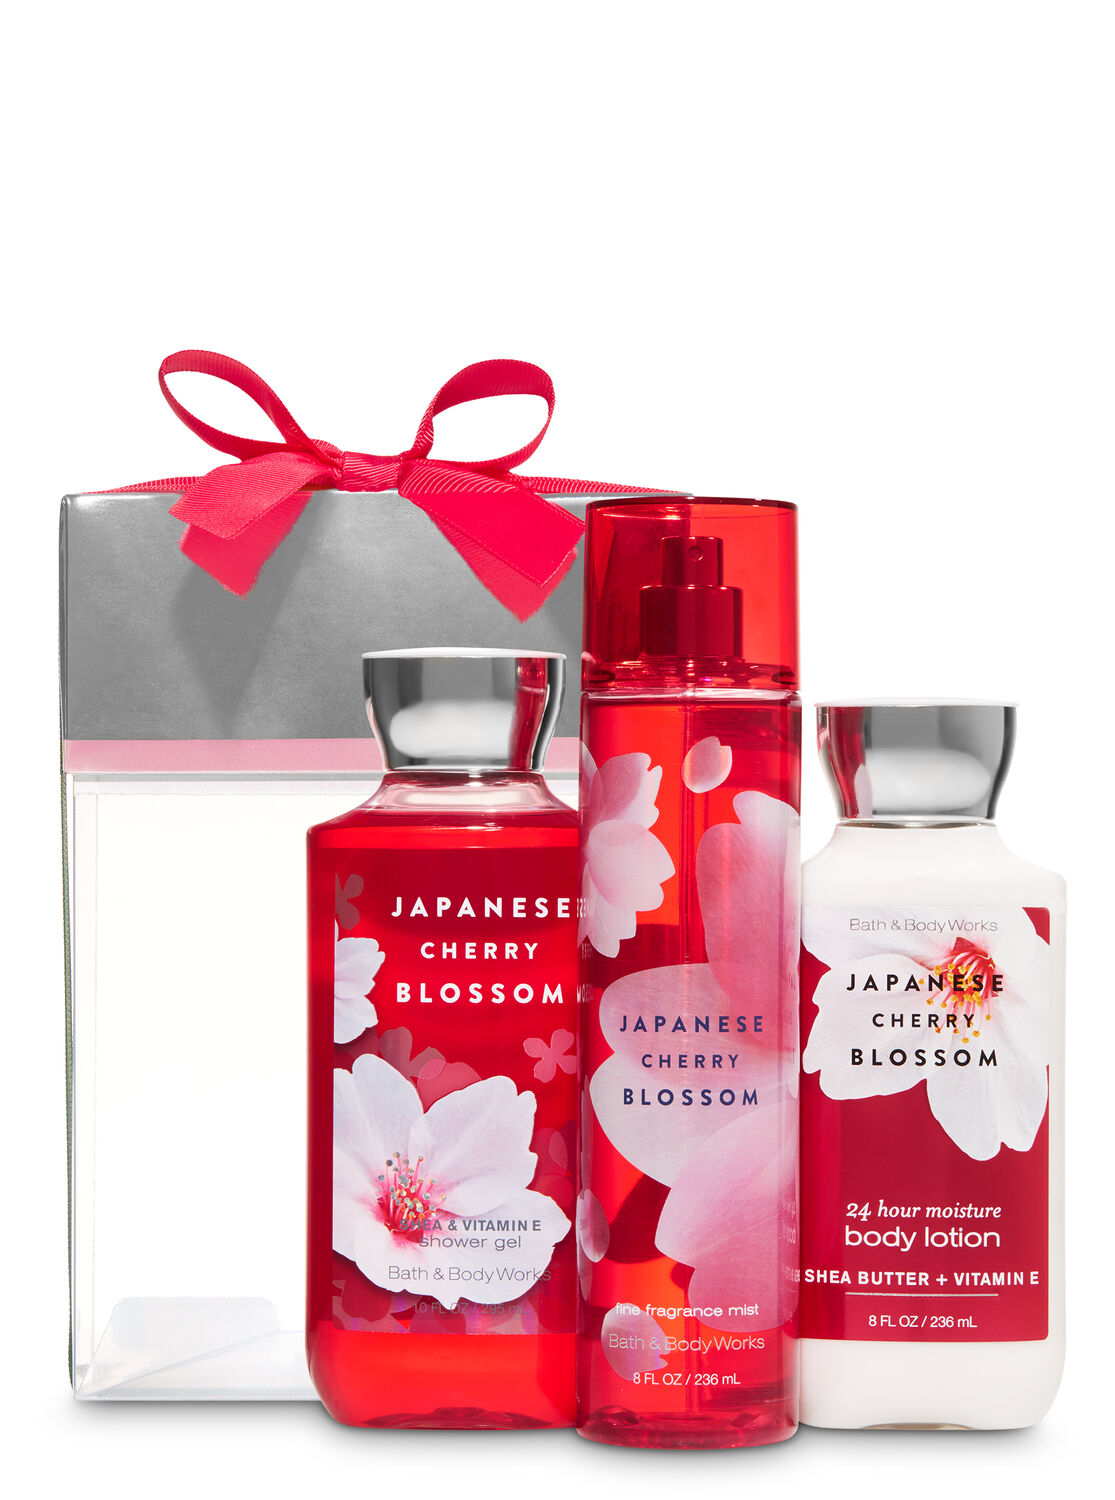 Japanese Cherry Blossom Box Gift Set Bath Body Works